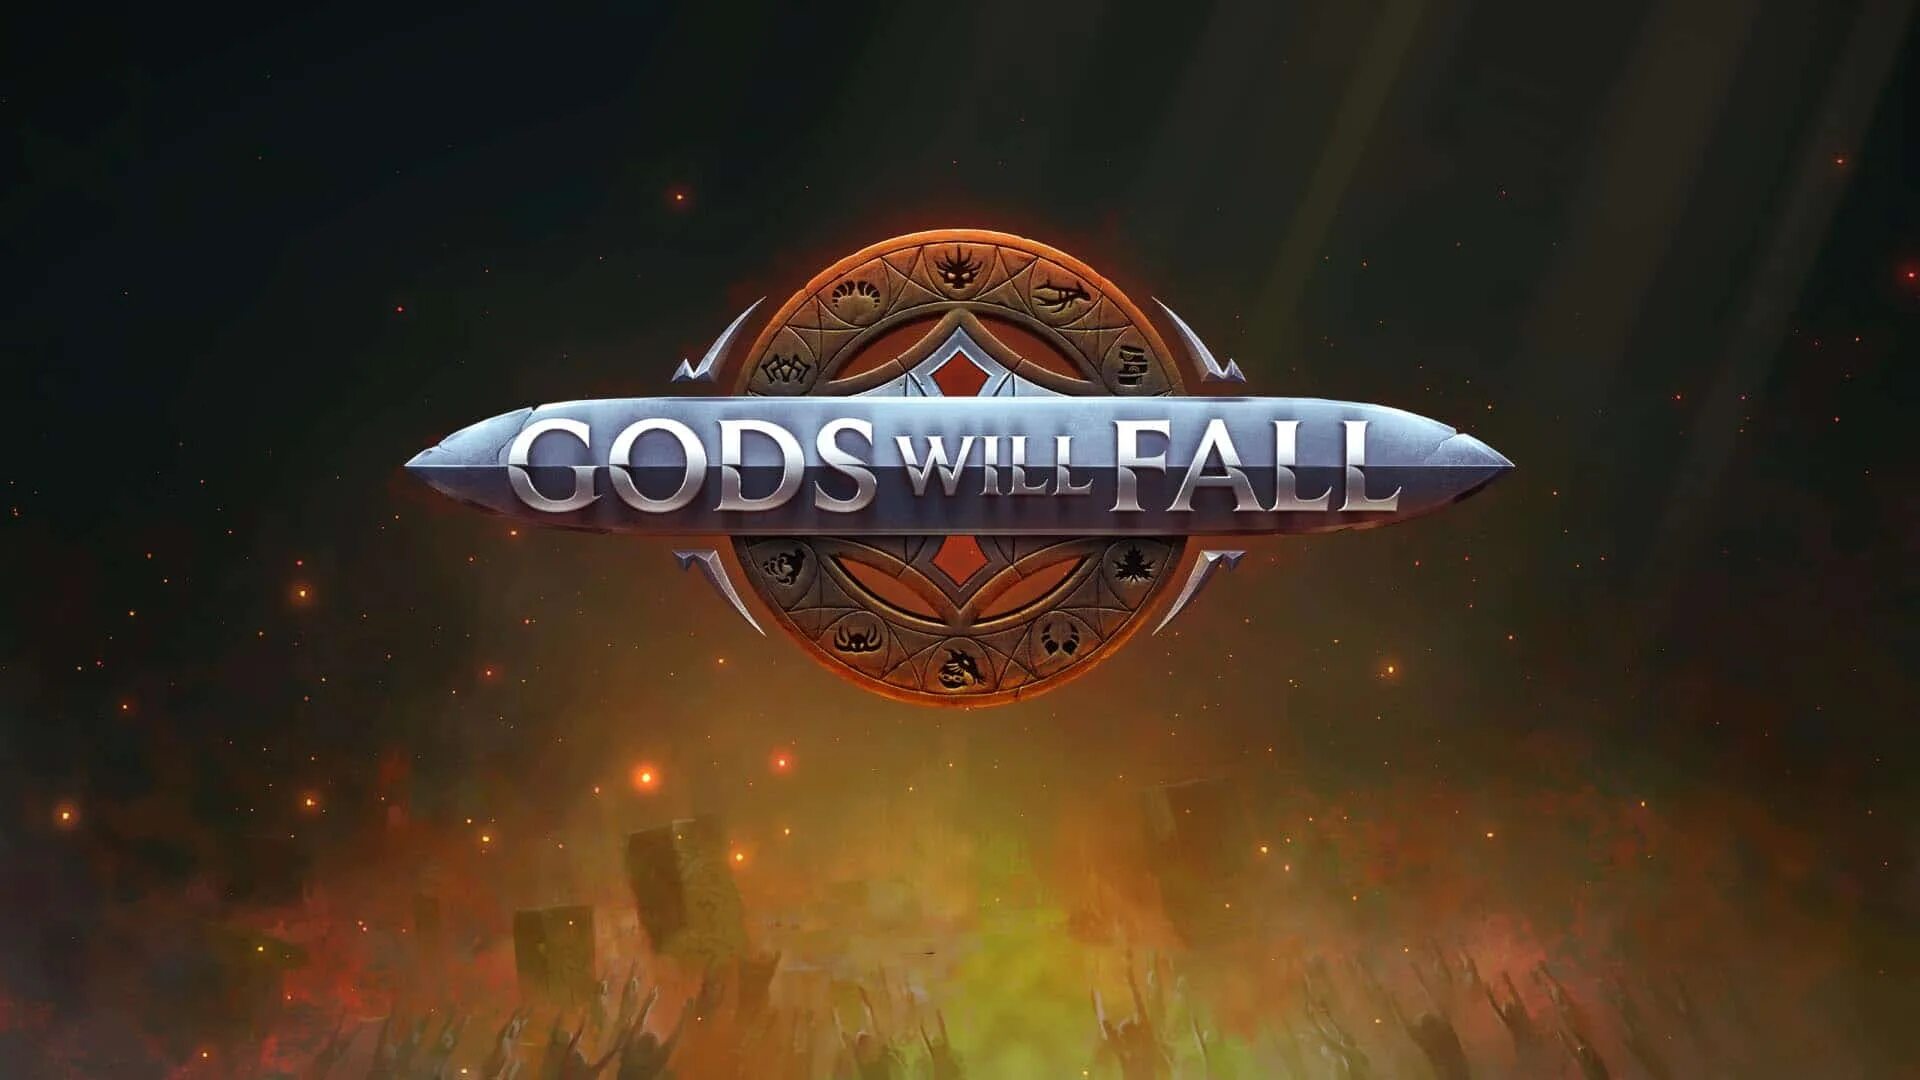 He will fall. Gods will Fall игра. Gods will Fall: Valiant Edition. Gods will Fall ps4. Gods will Fall боги.